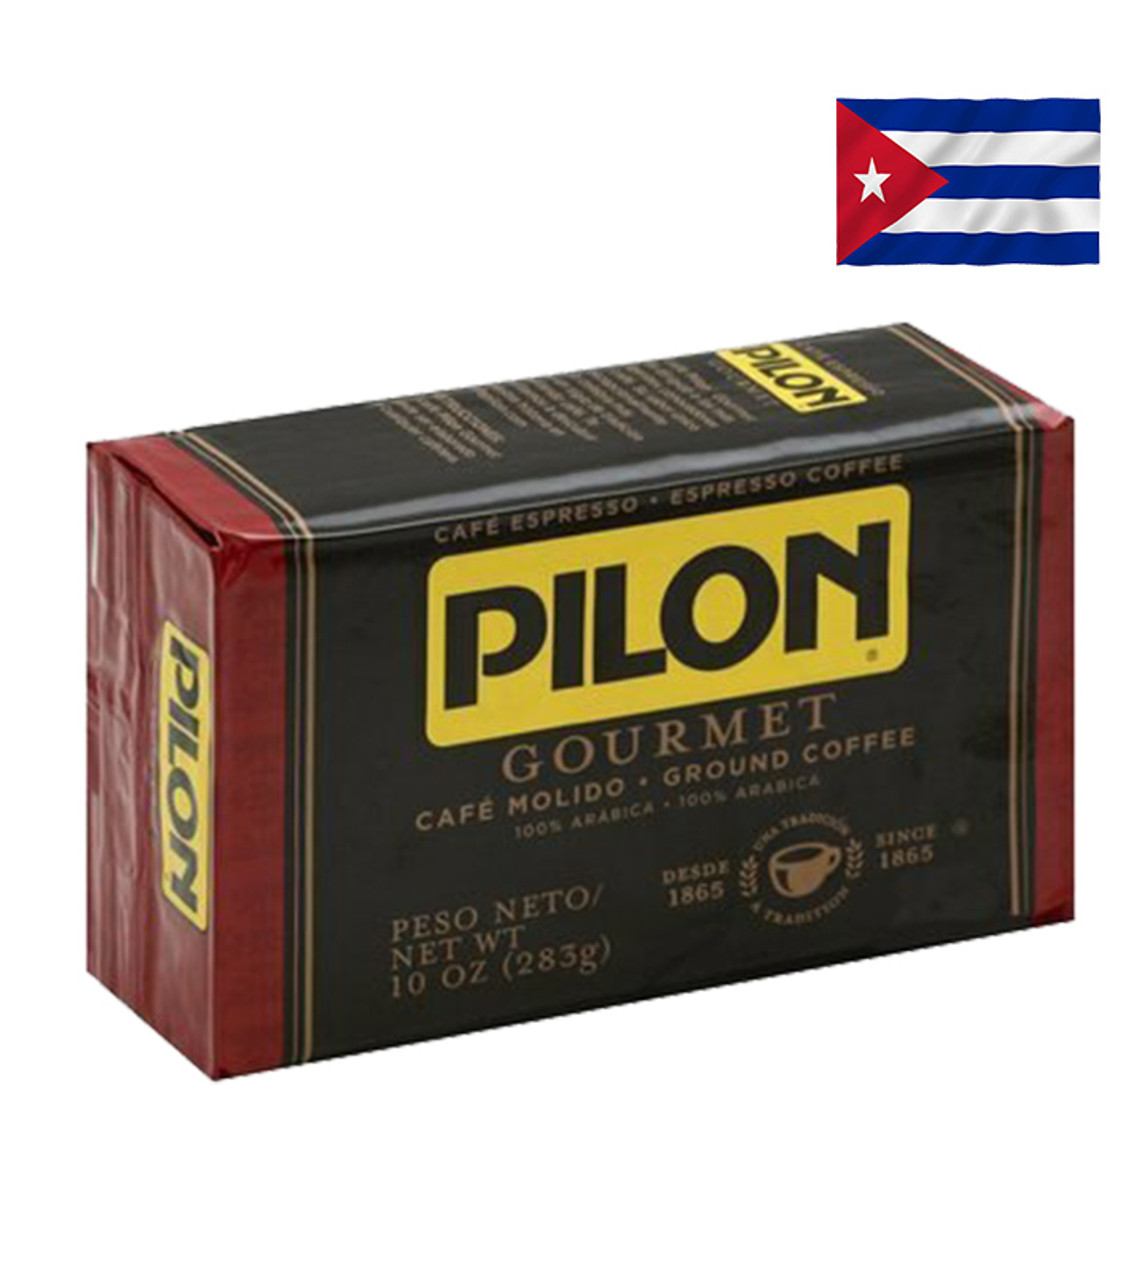 Cafe Pilon Review: Making Cuban Coffee in an Espresso Machine 